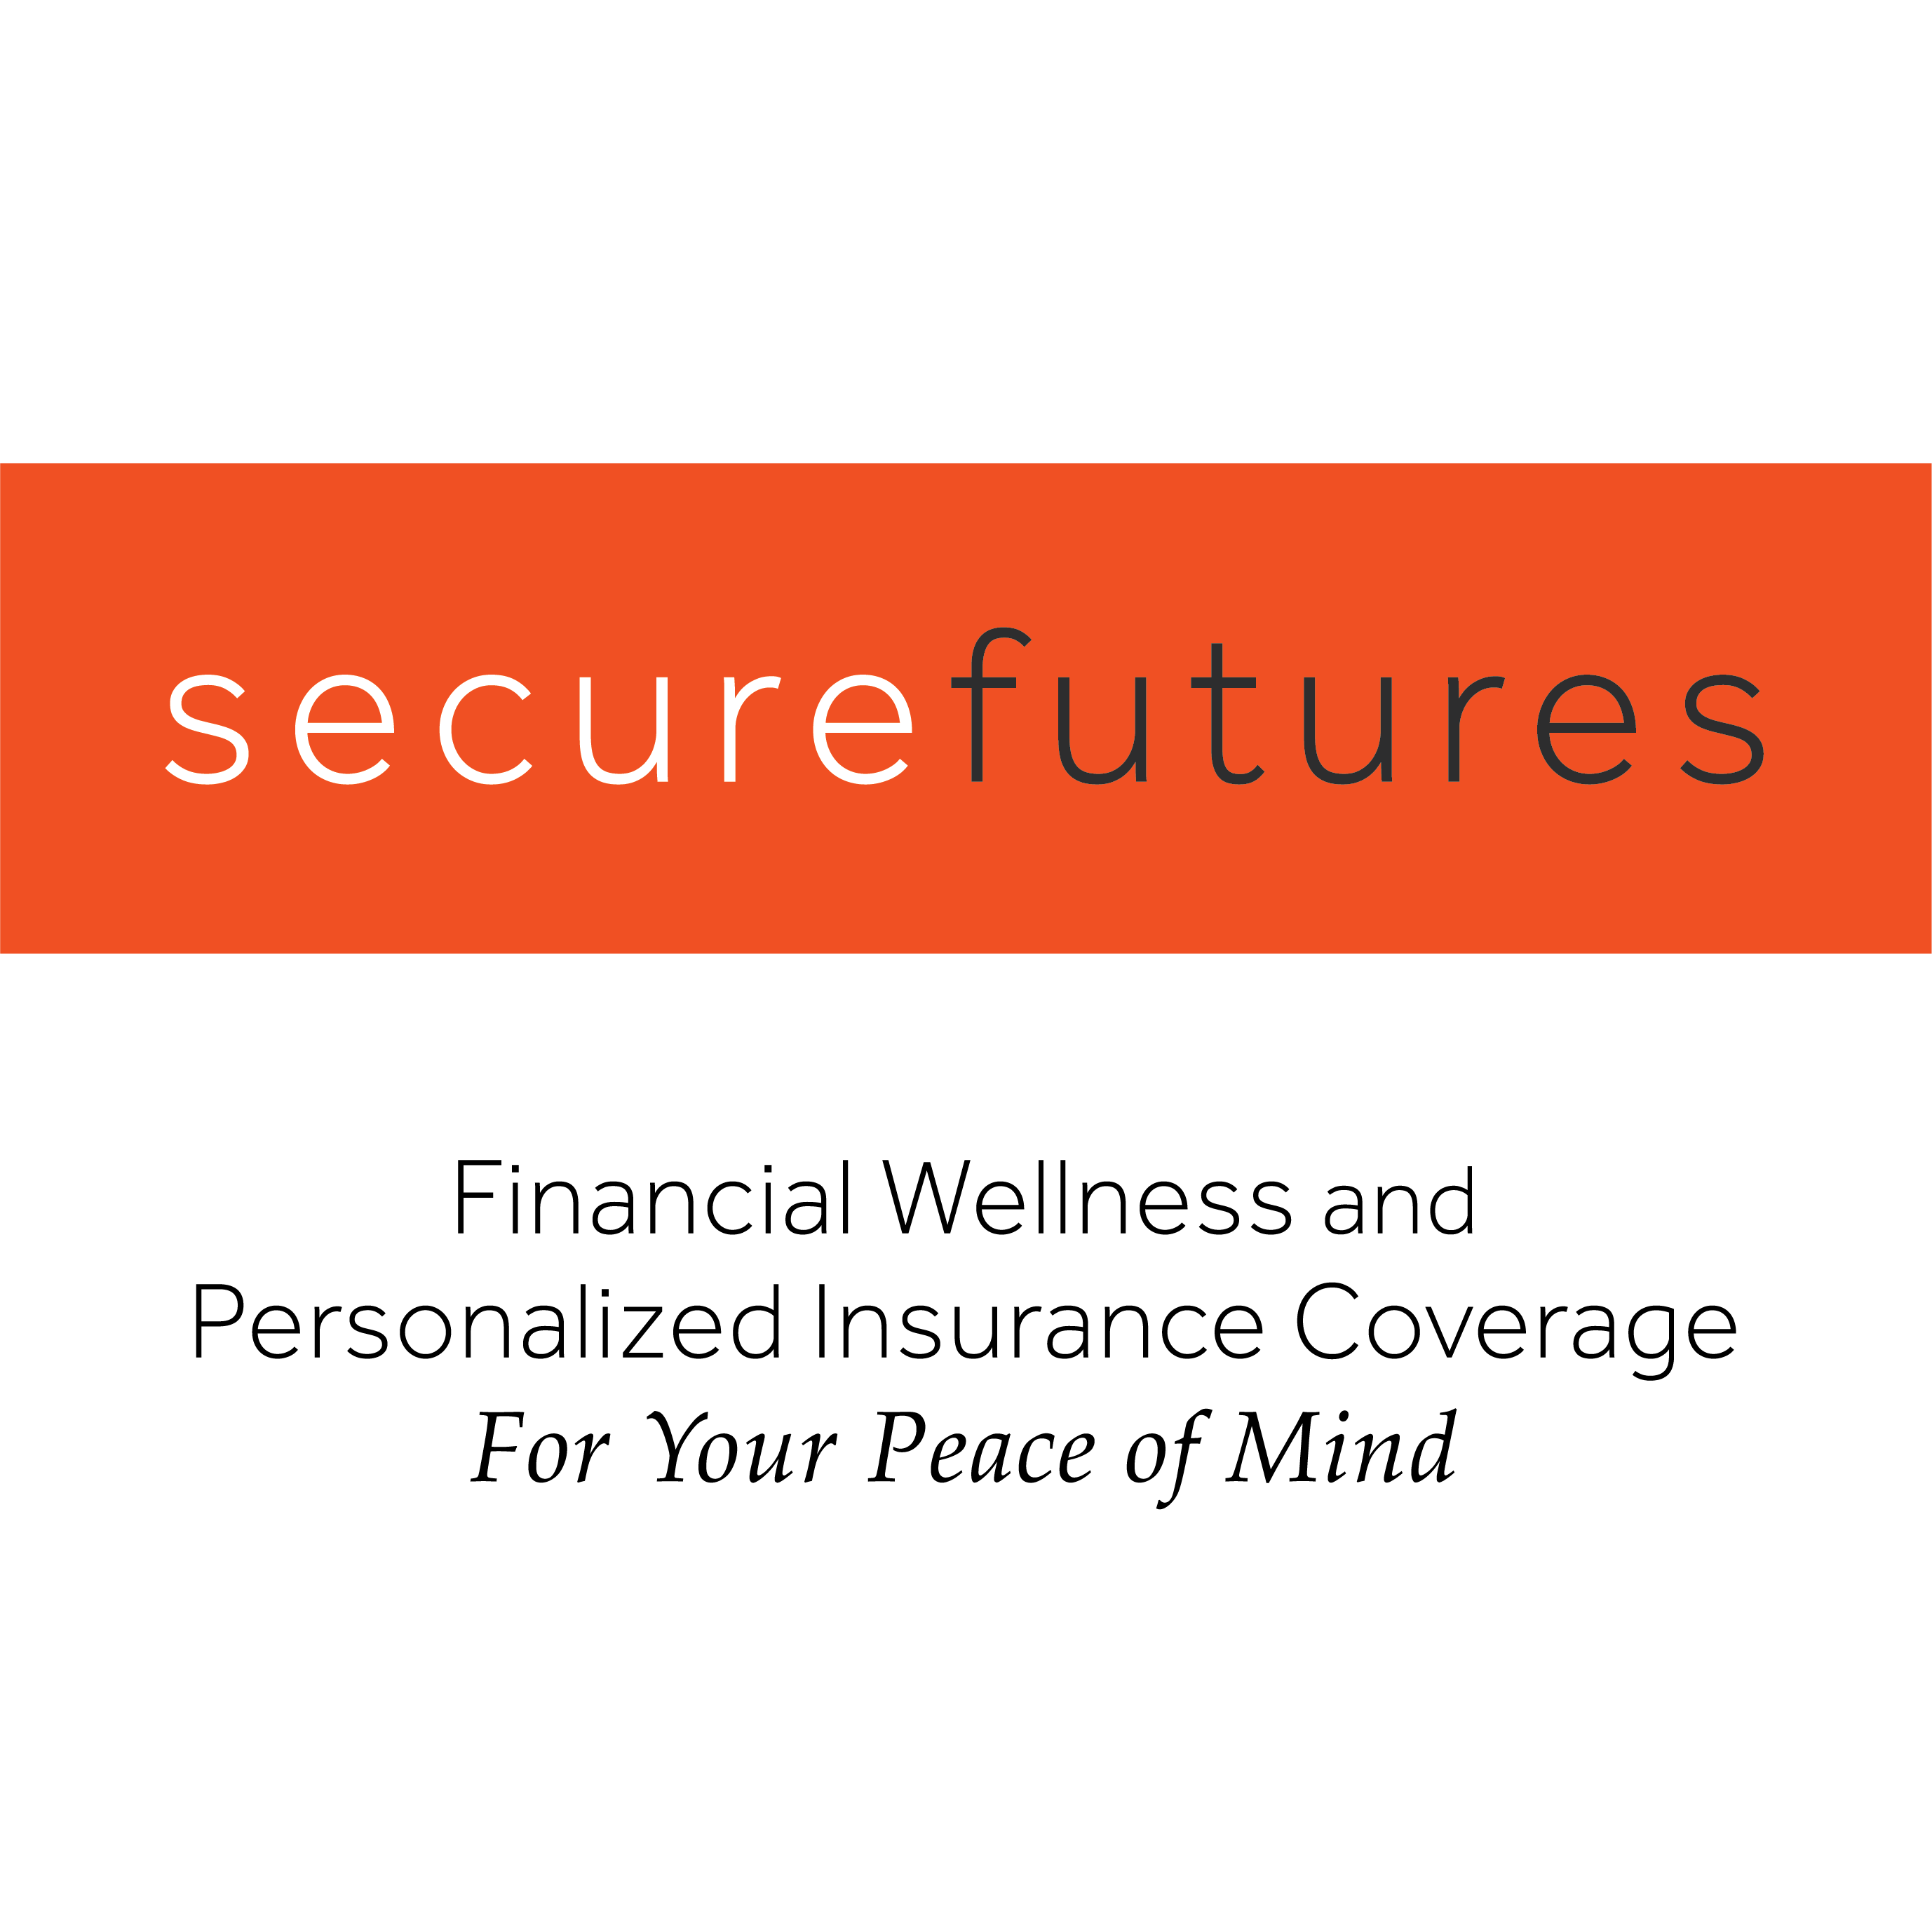 https://trevians.org/wp-content/uploads/sites/2831/2021/08/secure-futures-sq.png